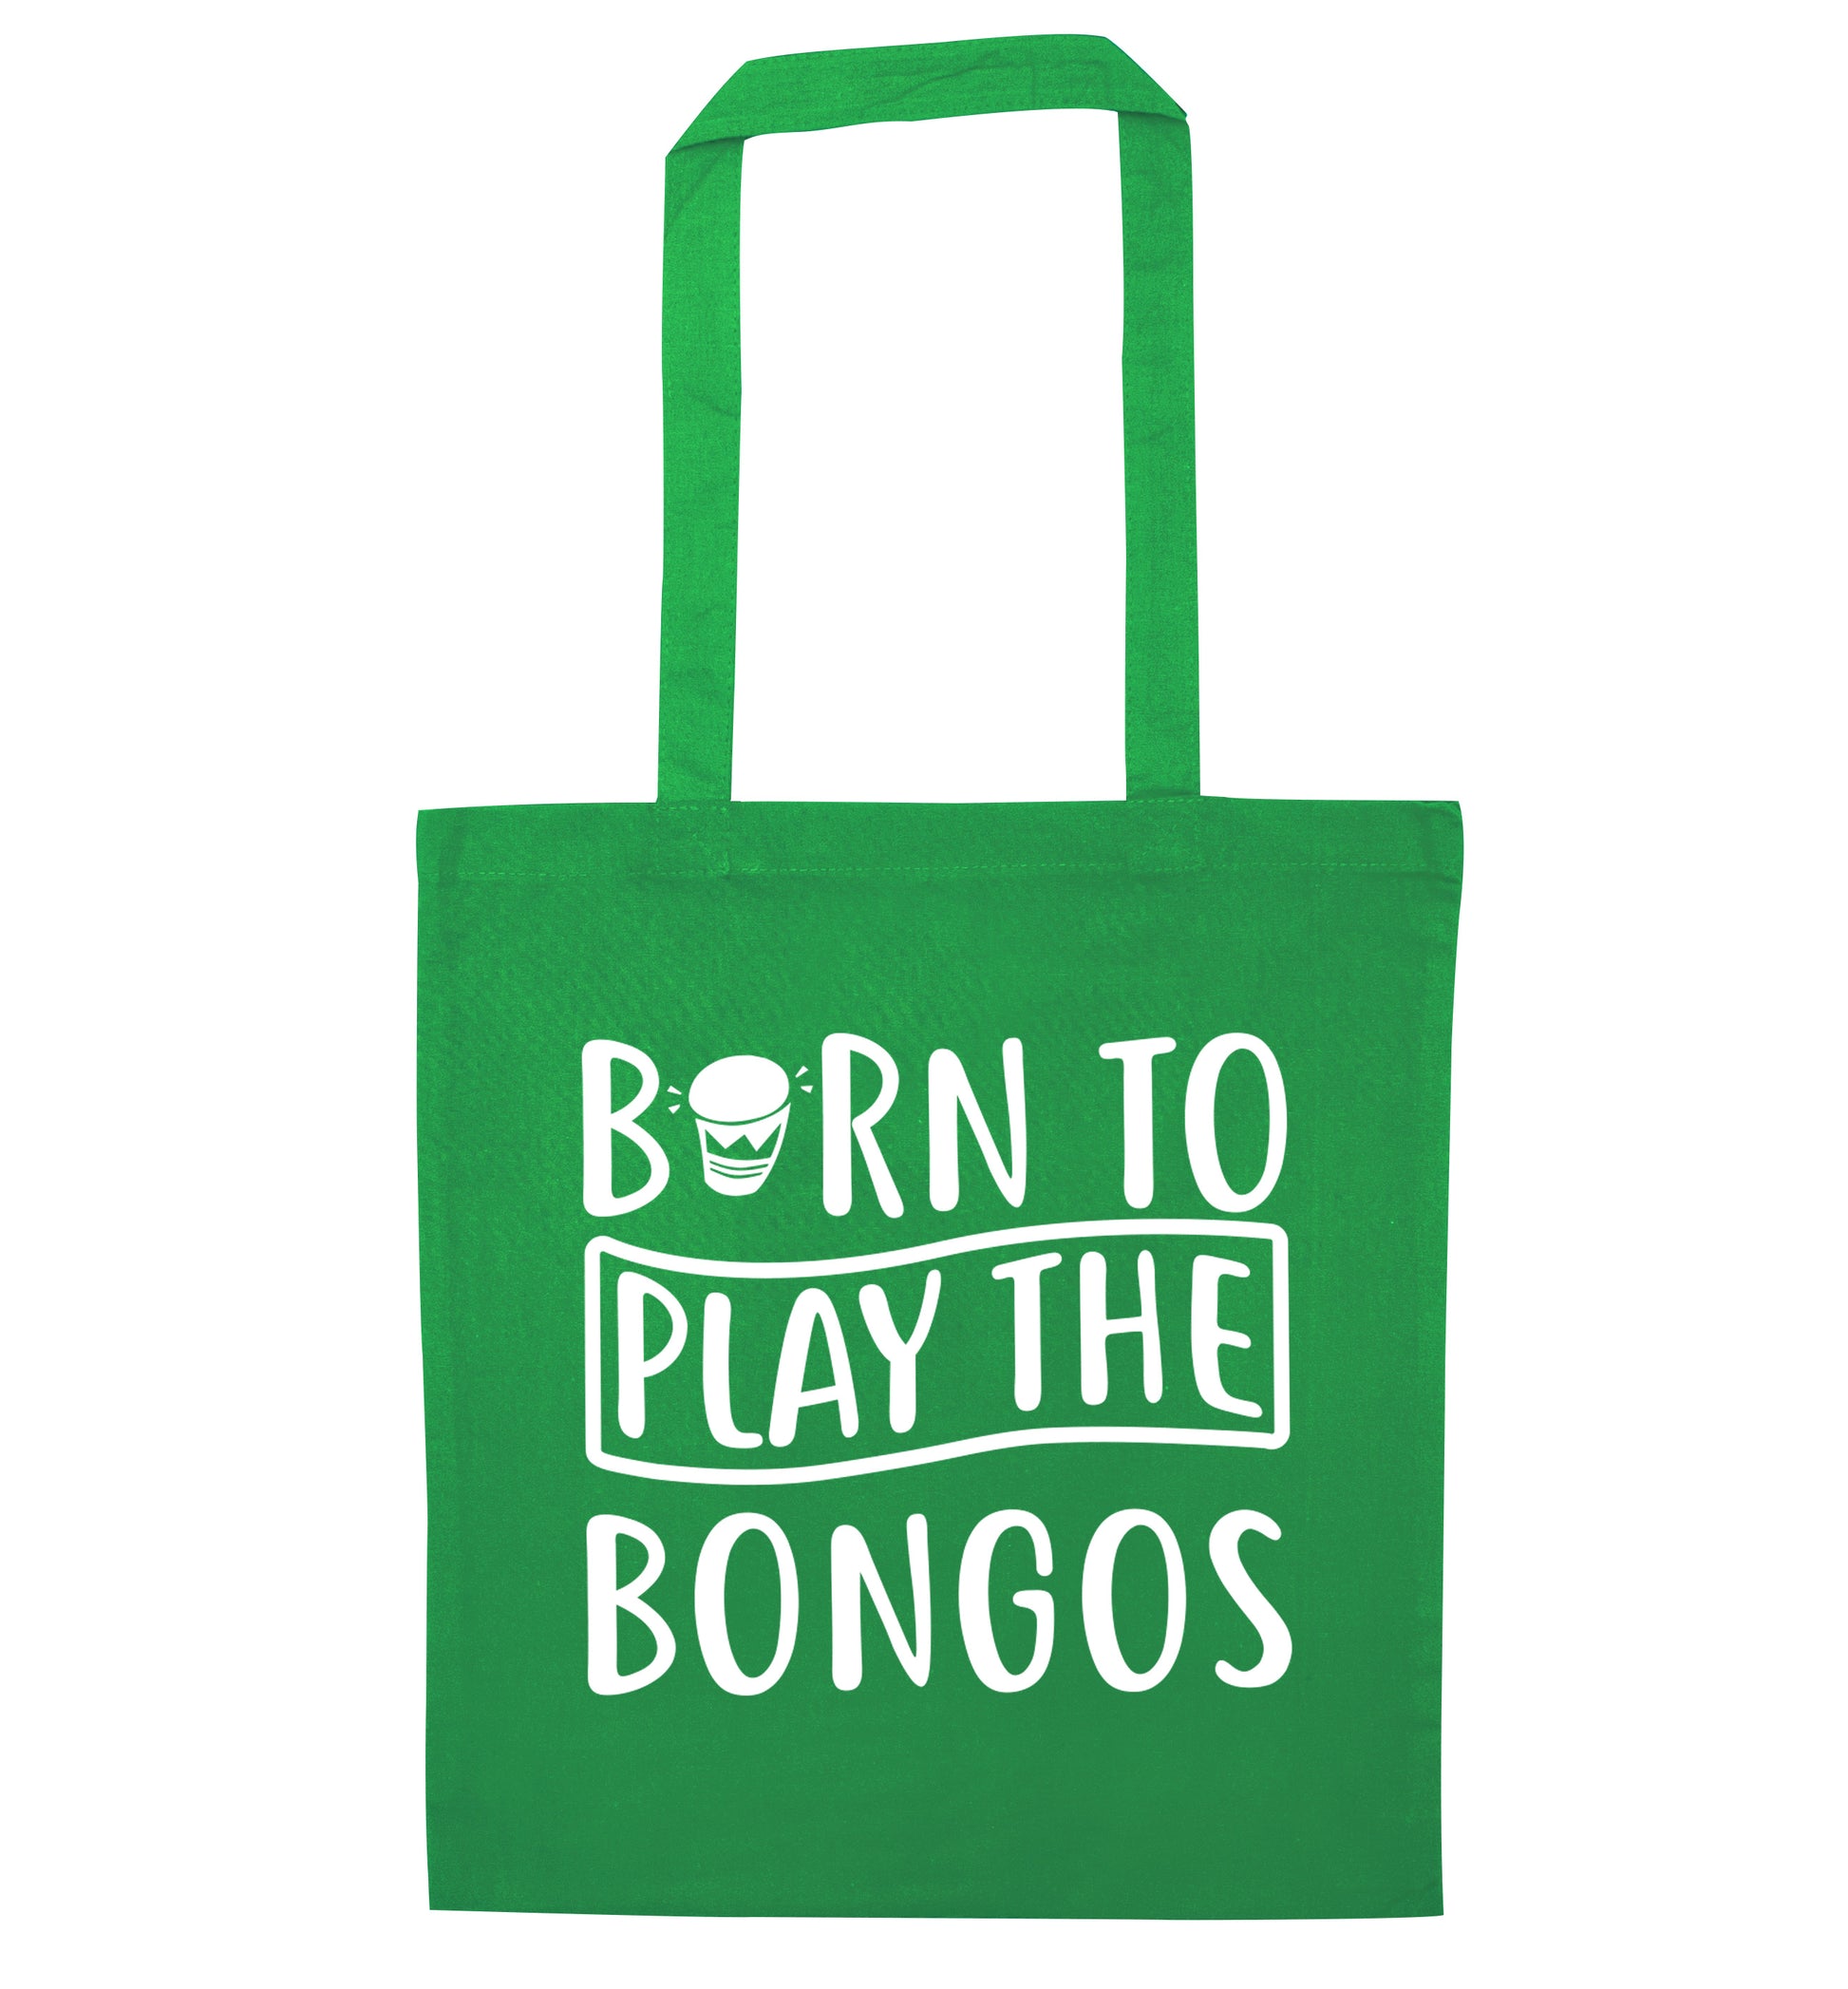 Born to play the bongos green tote bag